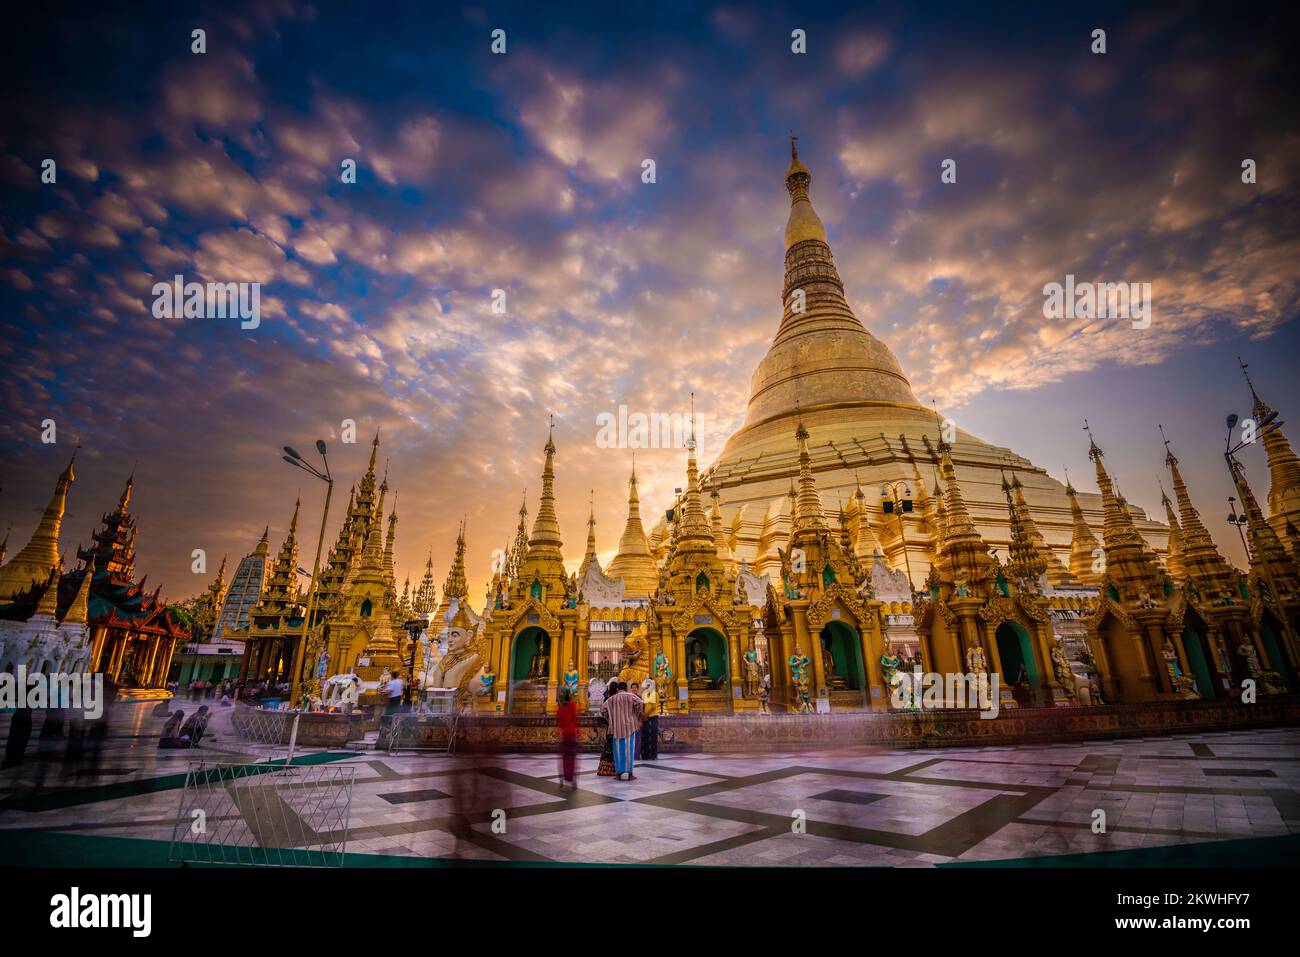 YANGON, MYANMAR - 17. OKTOBER 2015: Die Morgenanbeter besuchen die Shwedagon Pagode. Shwedagon Pagode ist die heiligste buddhistische Pagode in Myanmar. Stockfoto